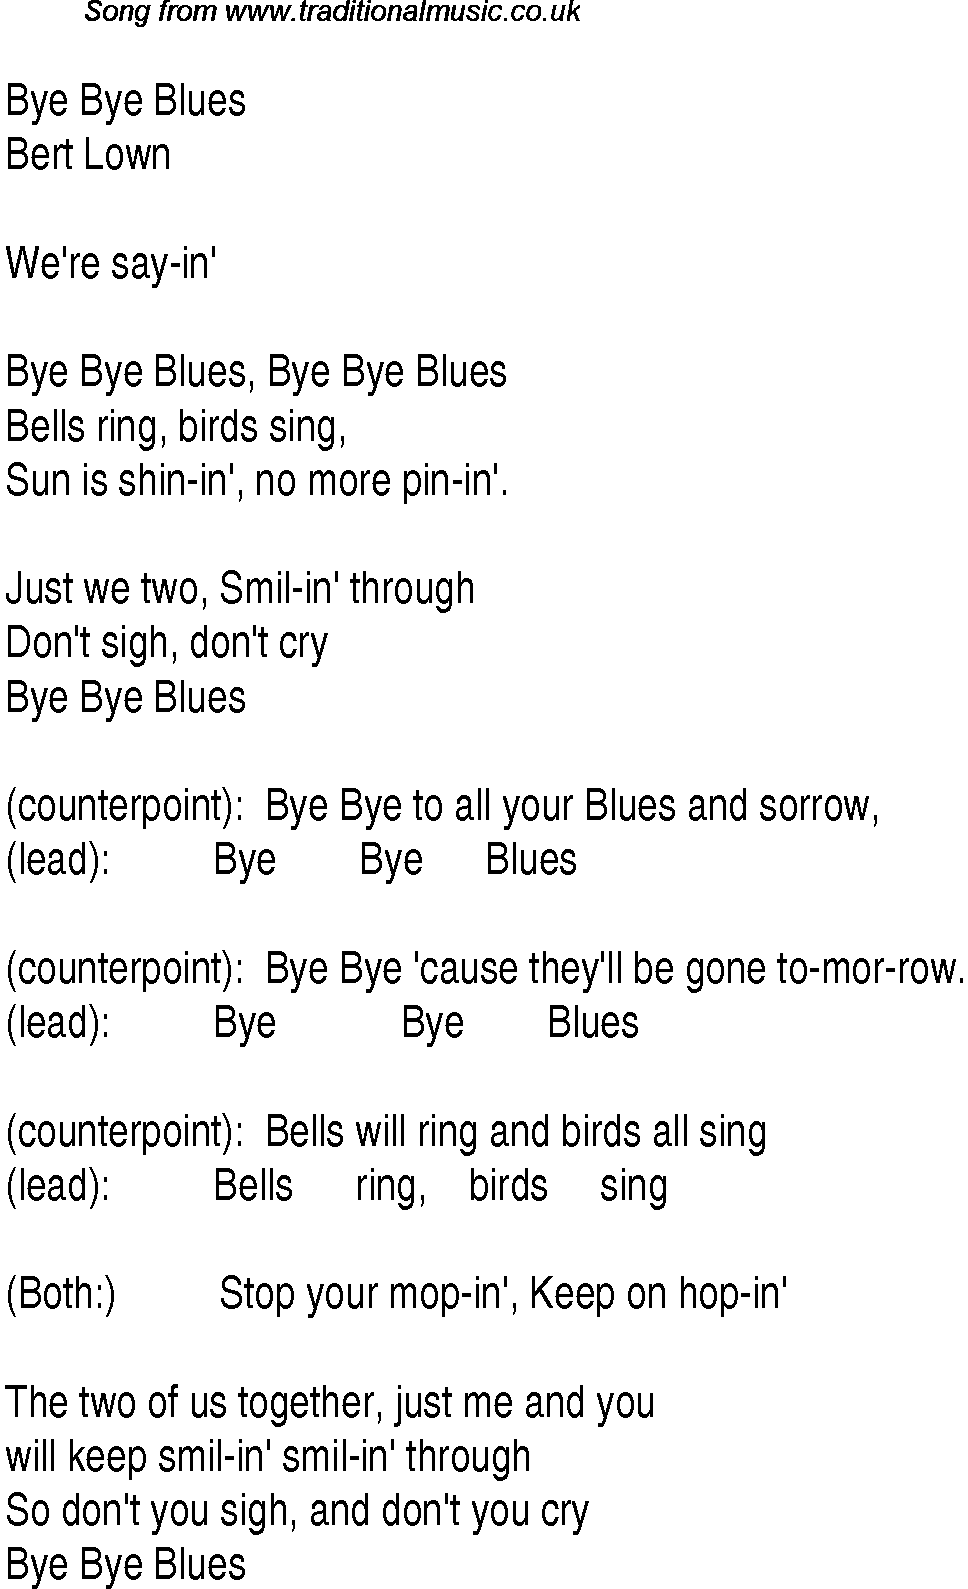 Music charts top songs 1930 - lyrics for Bye Bye Blues